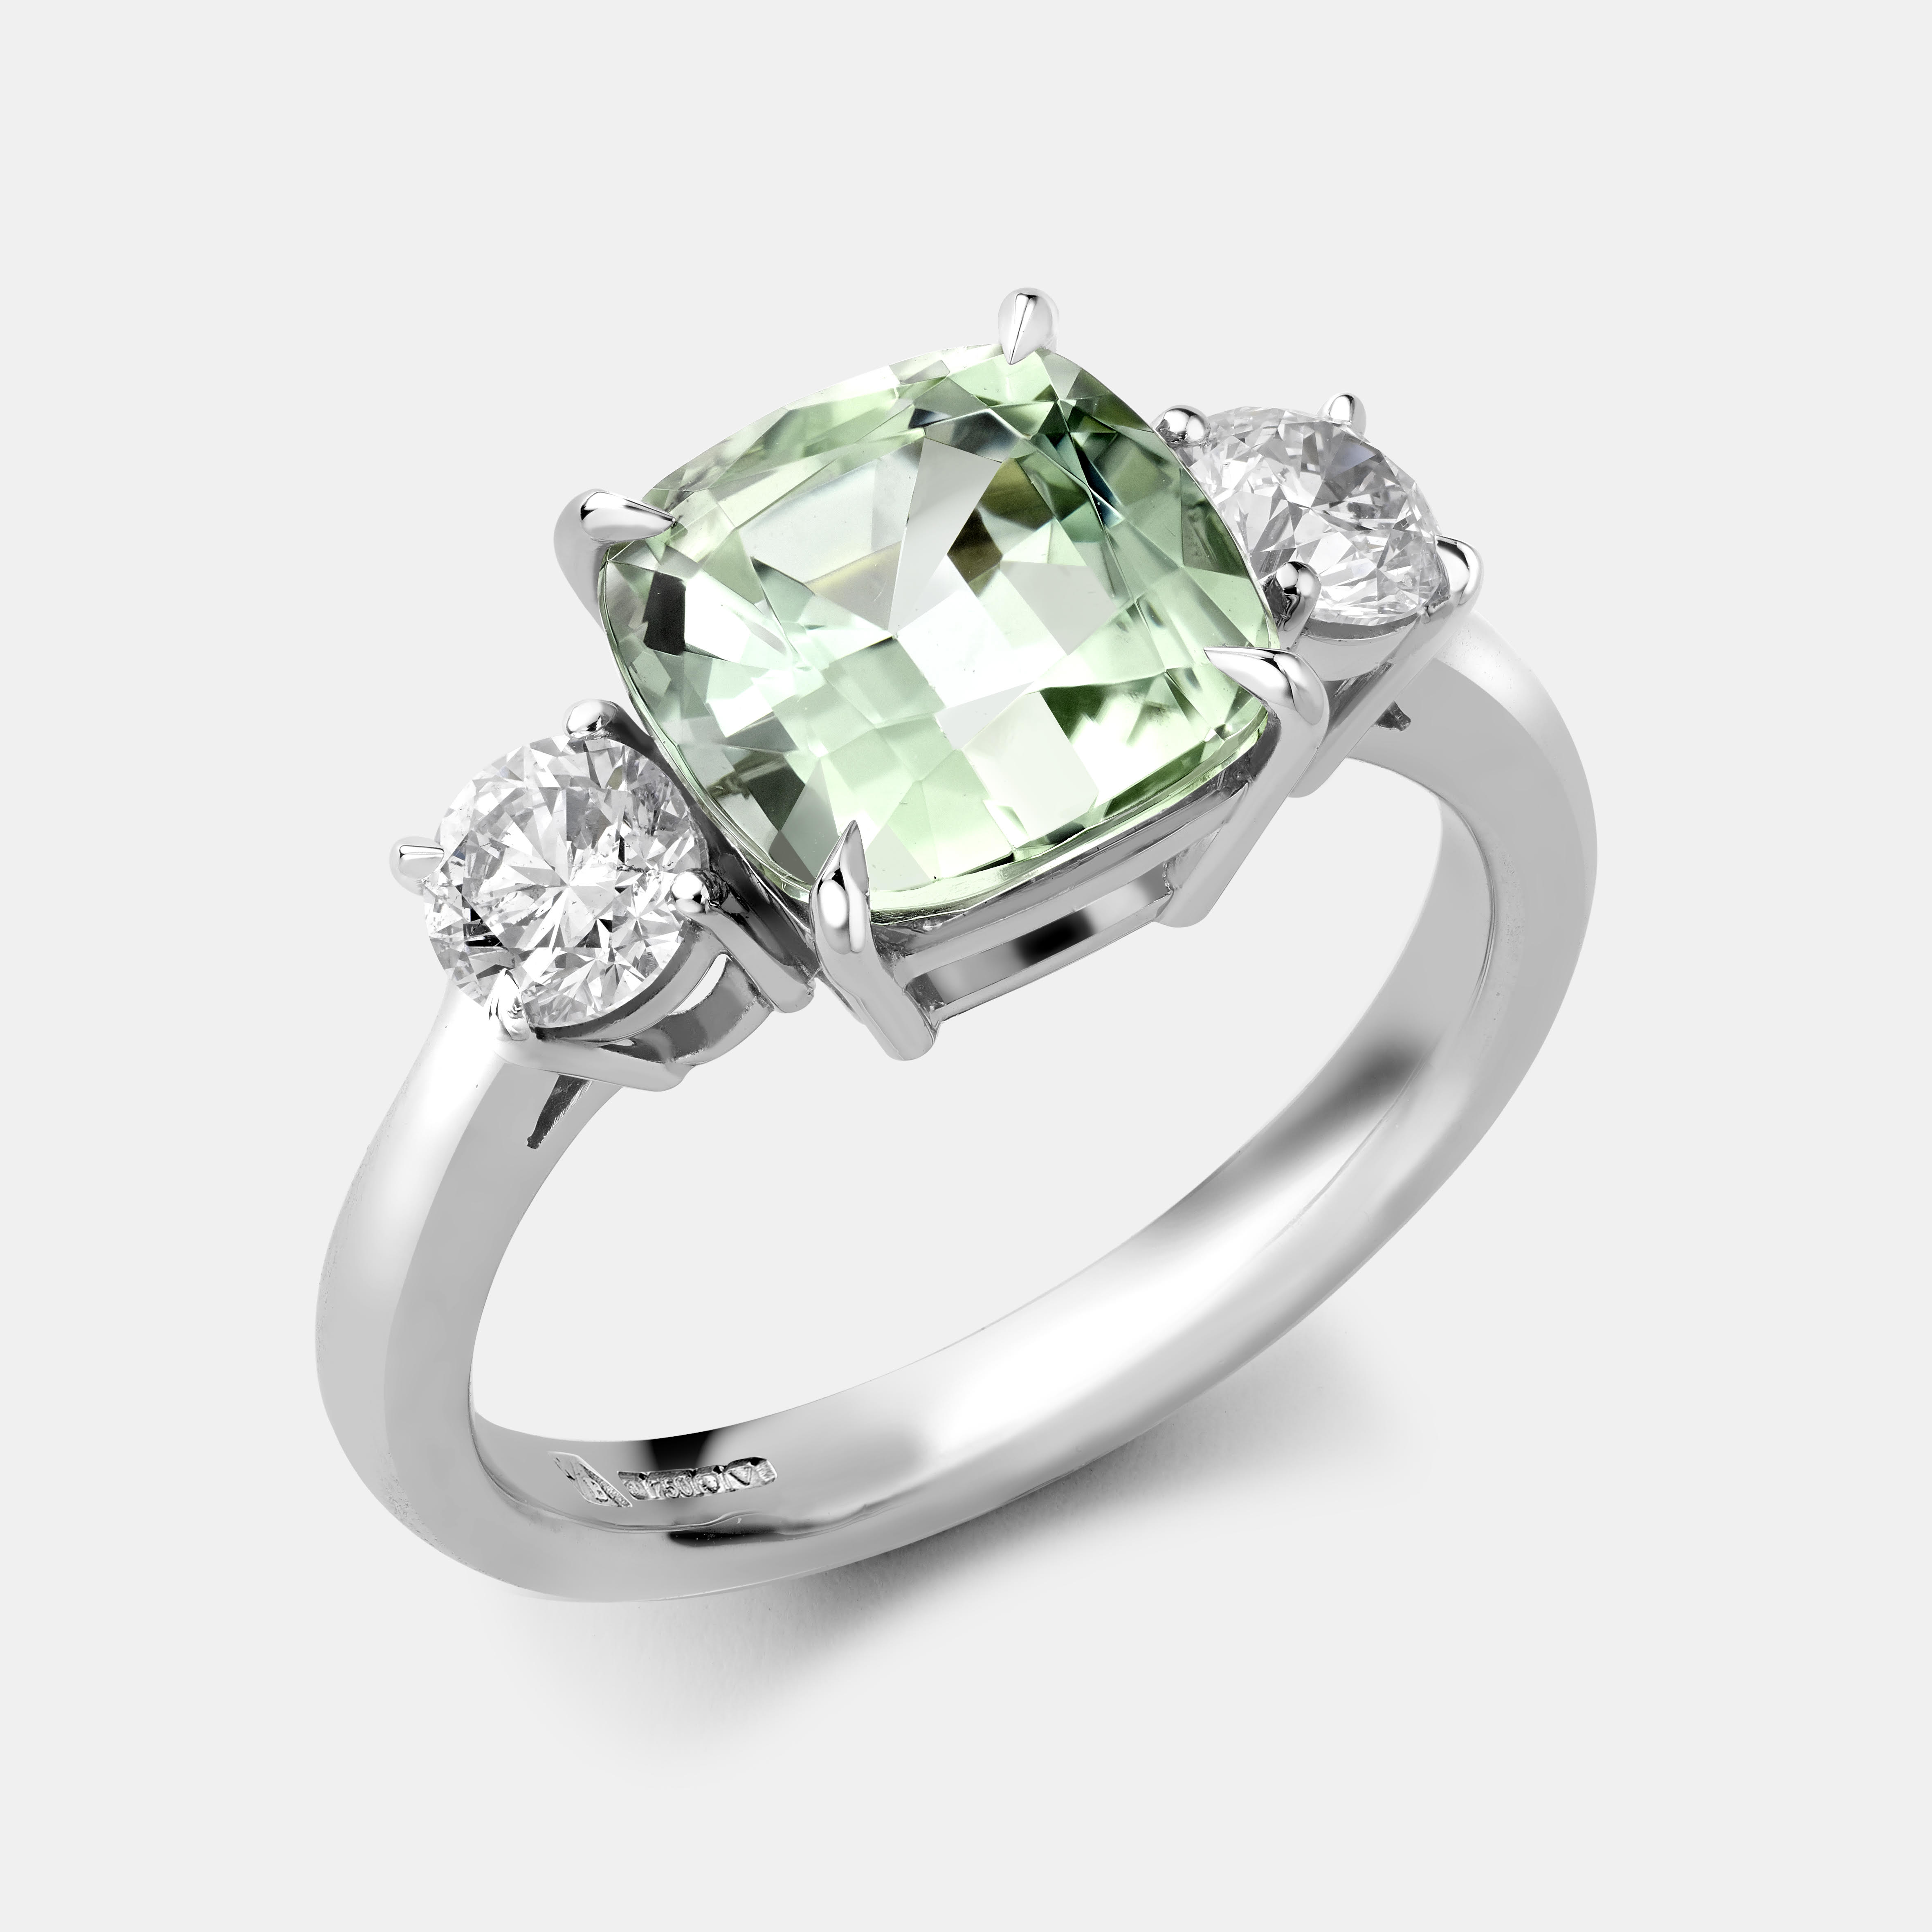 The Mint Green Tourmaline and Diamond Ring